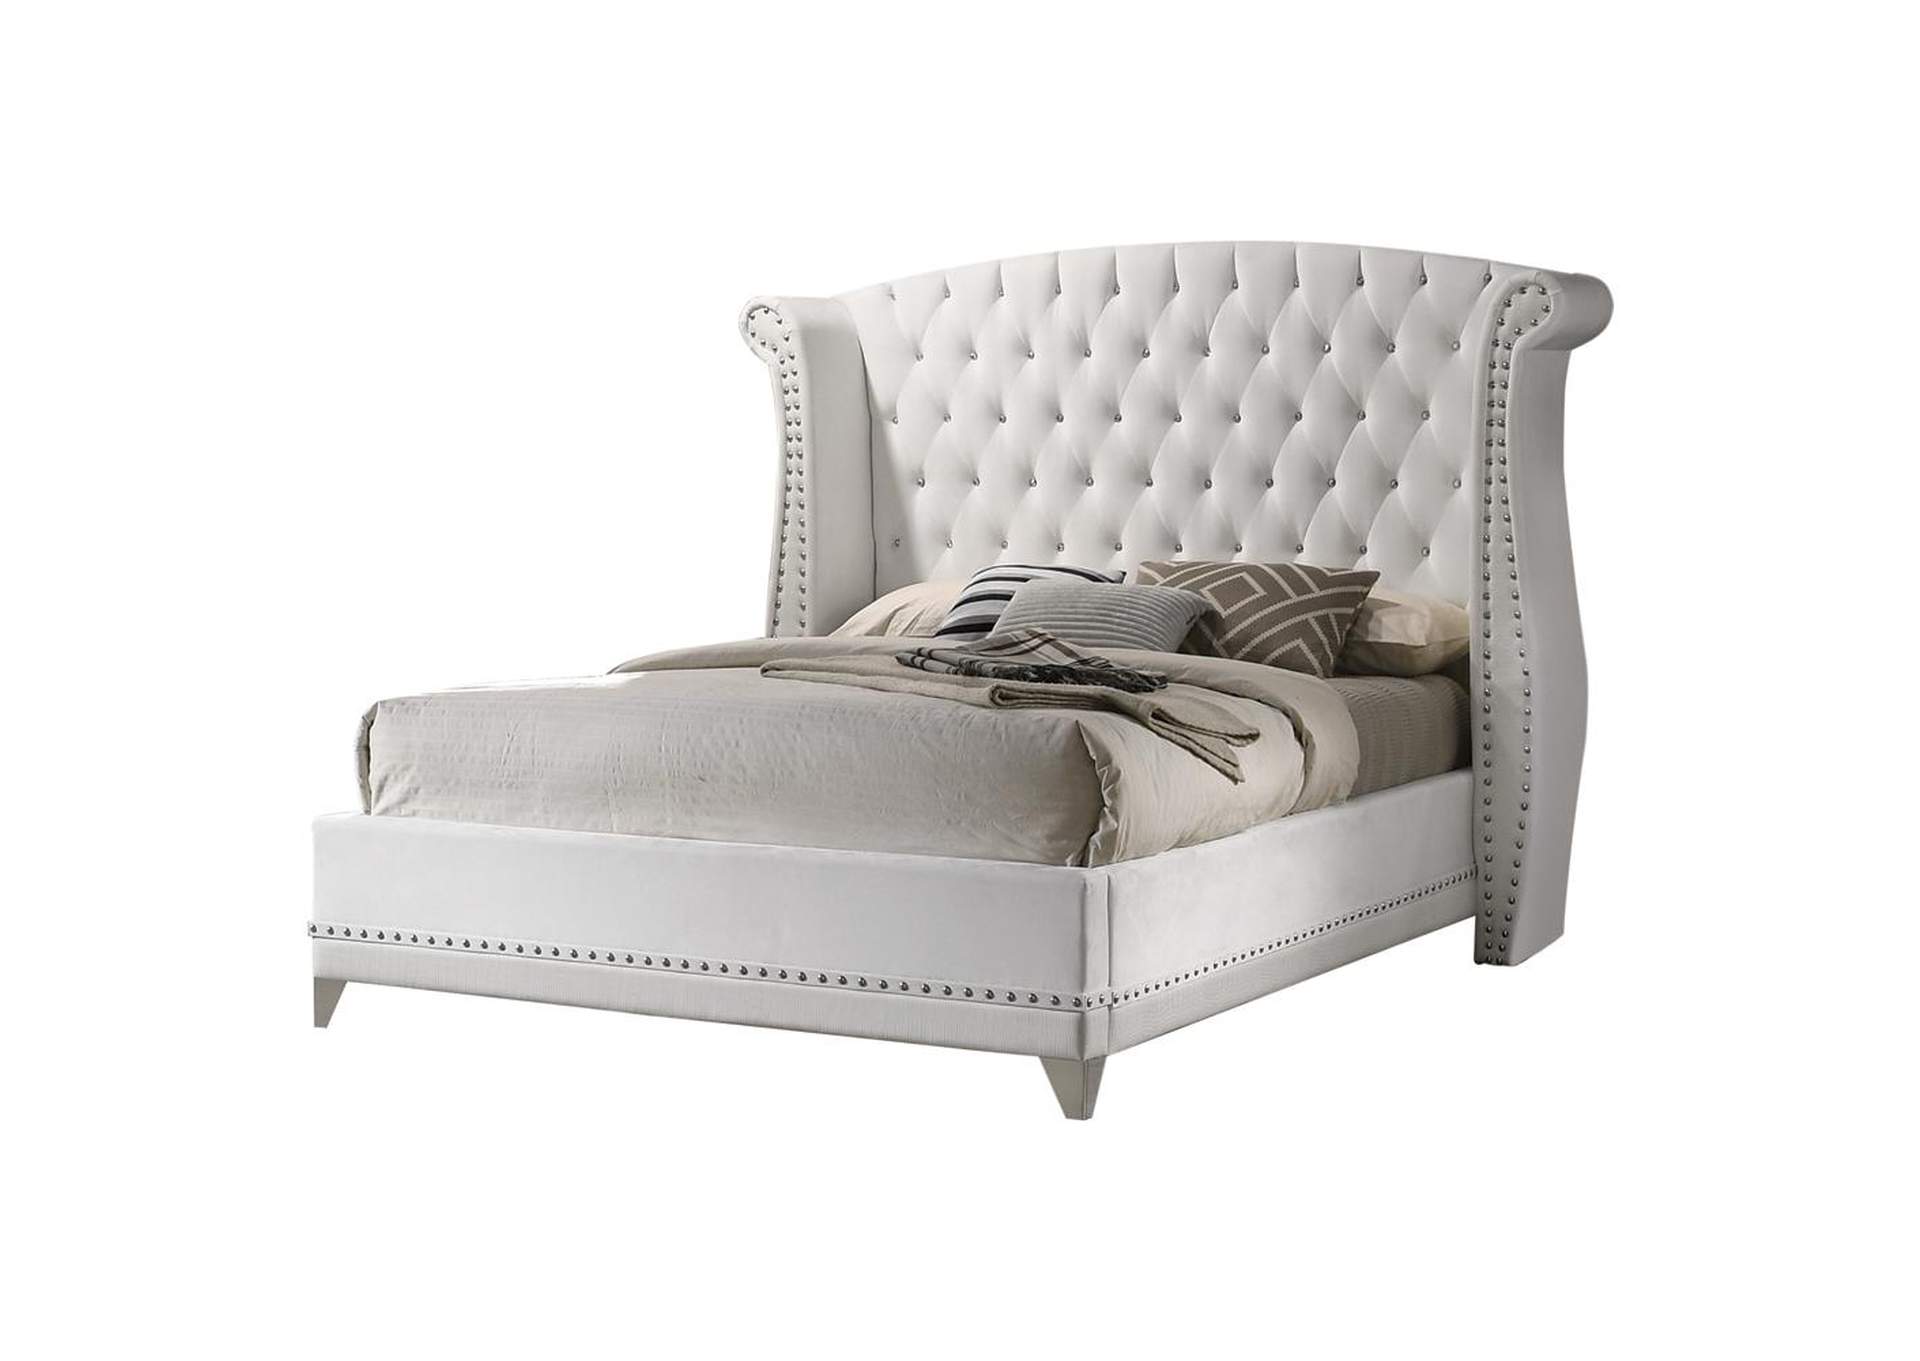 California King Bed Best Furniture, Art Van King Bed Frame